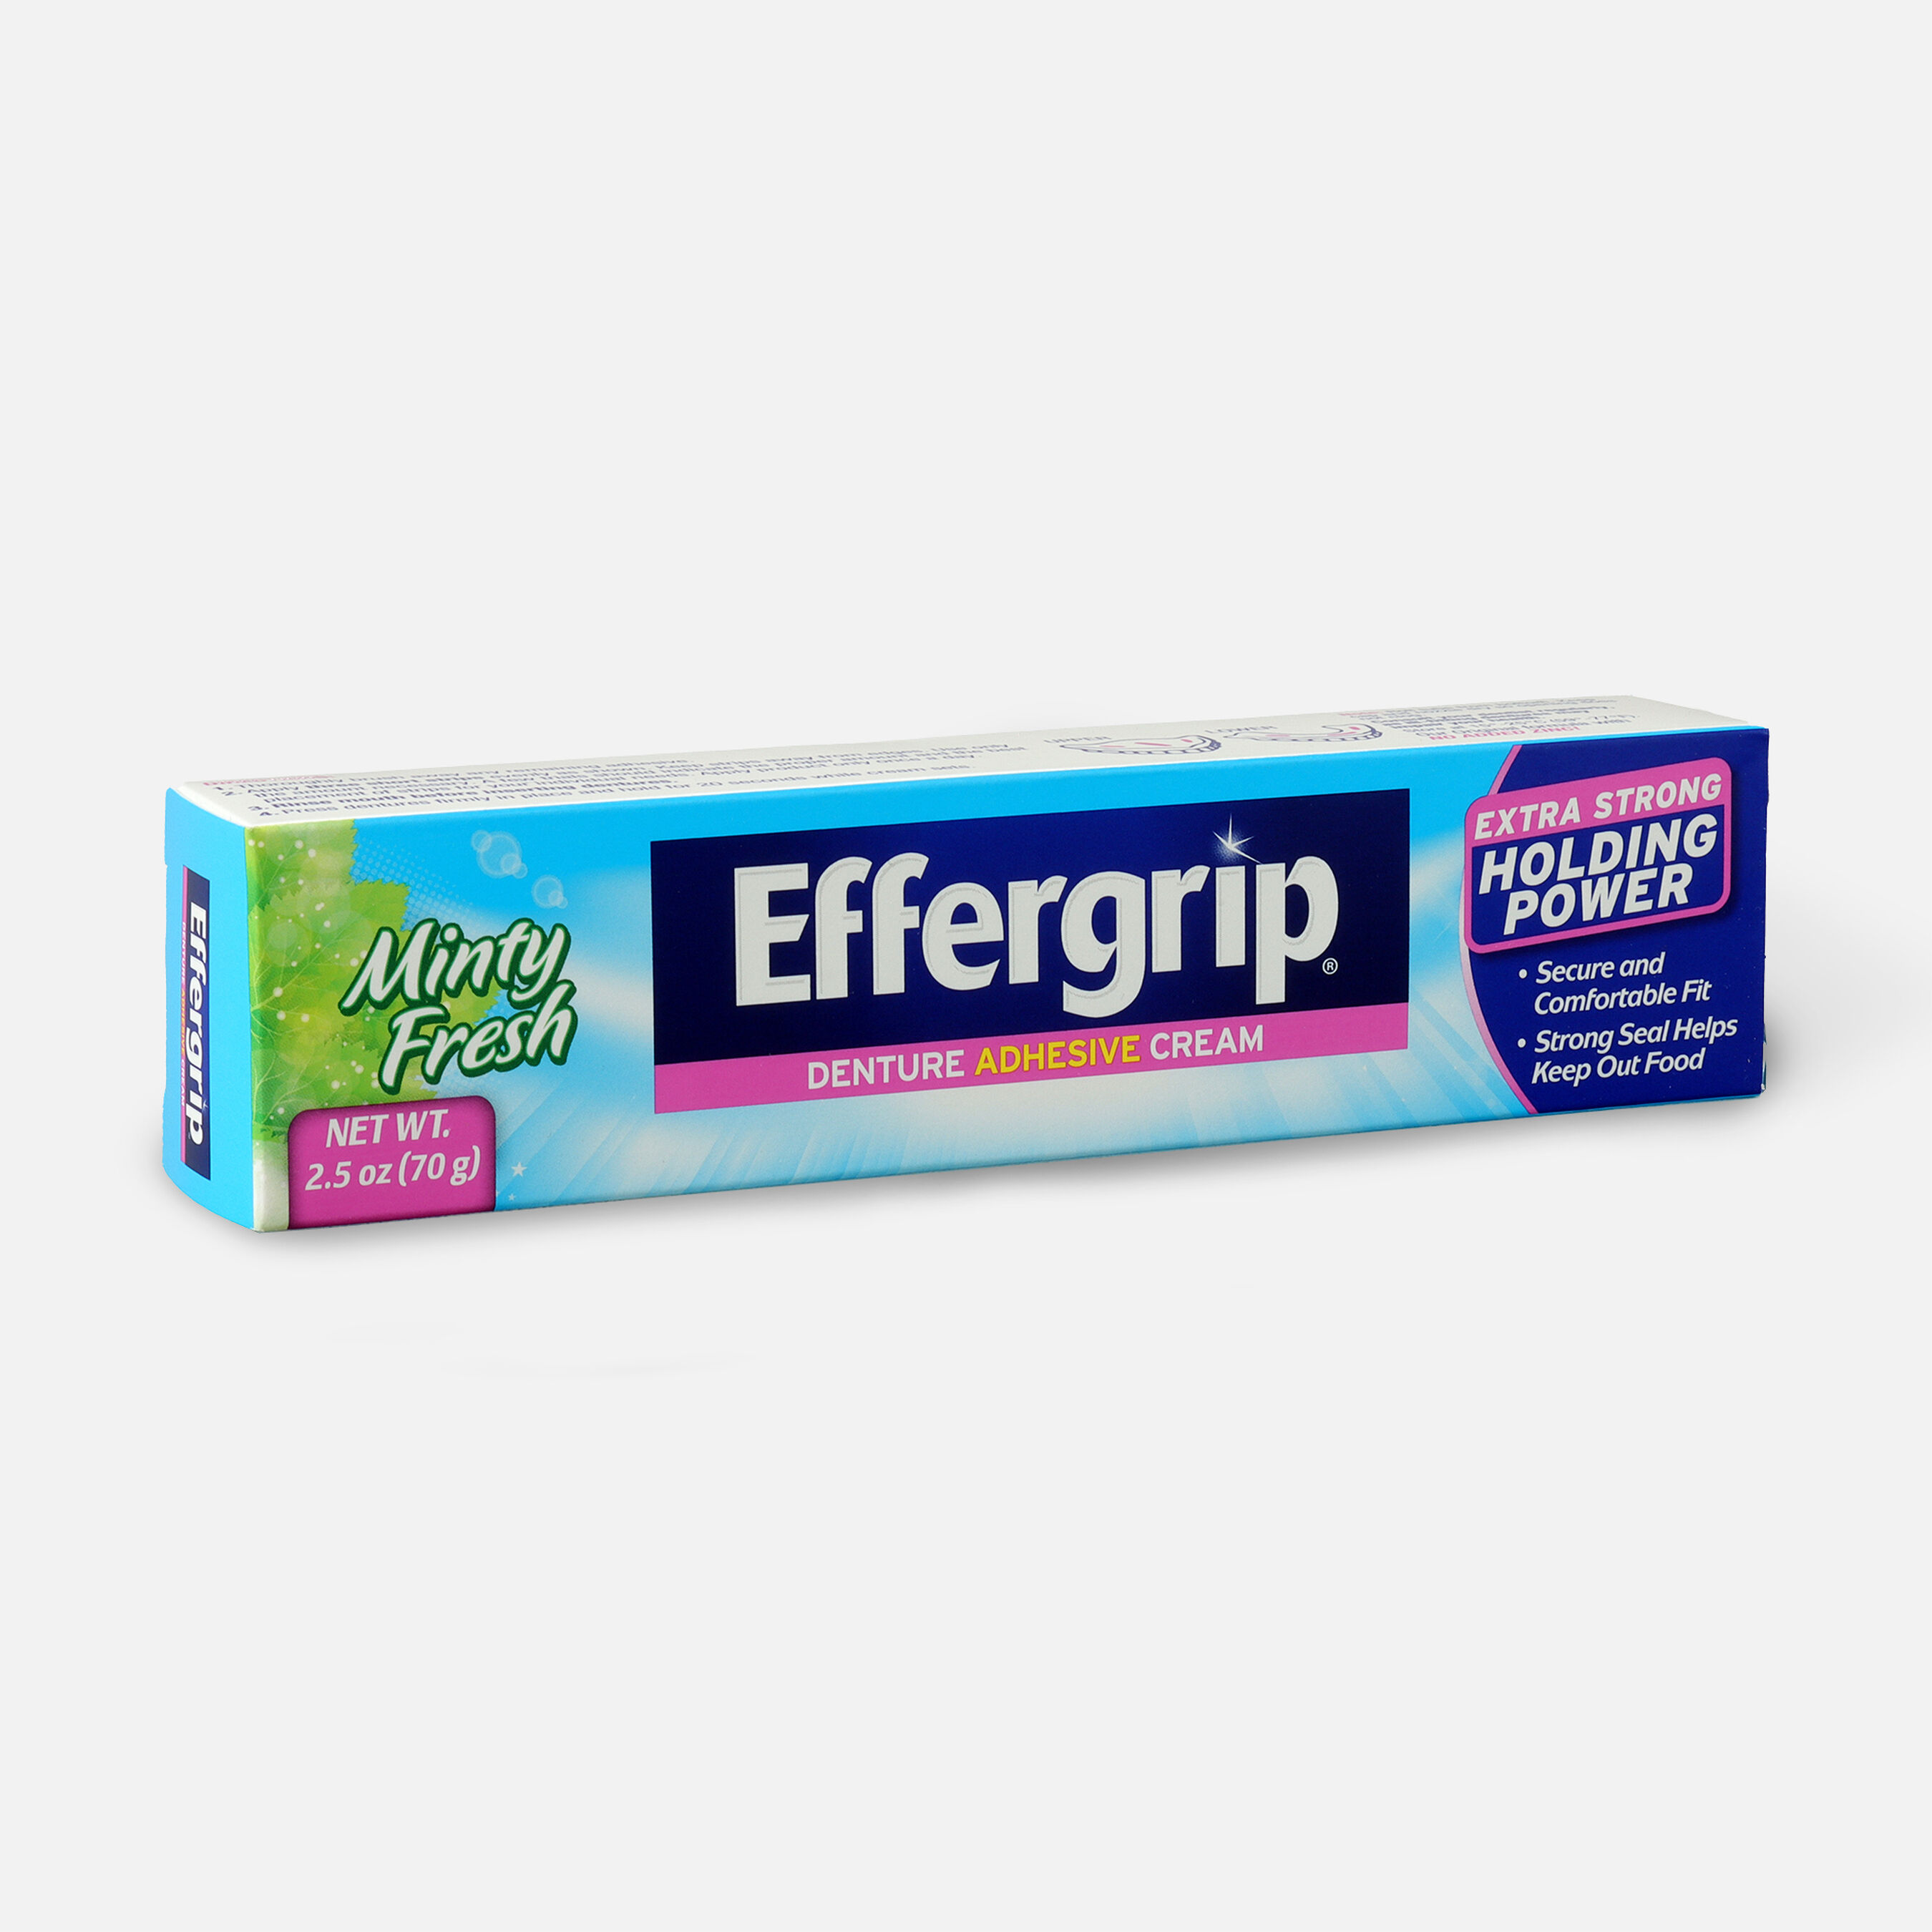 Effergrip Denture Adhesive Cream Minty Fresh, 2.5oz